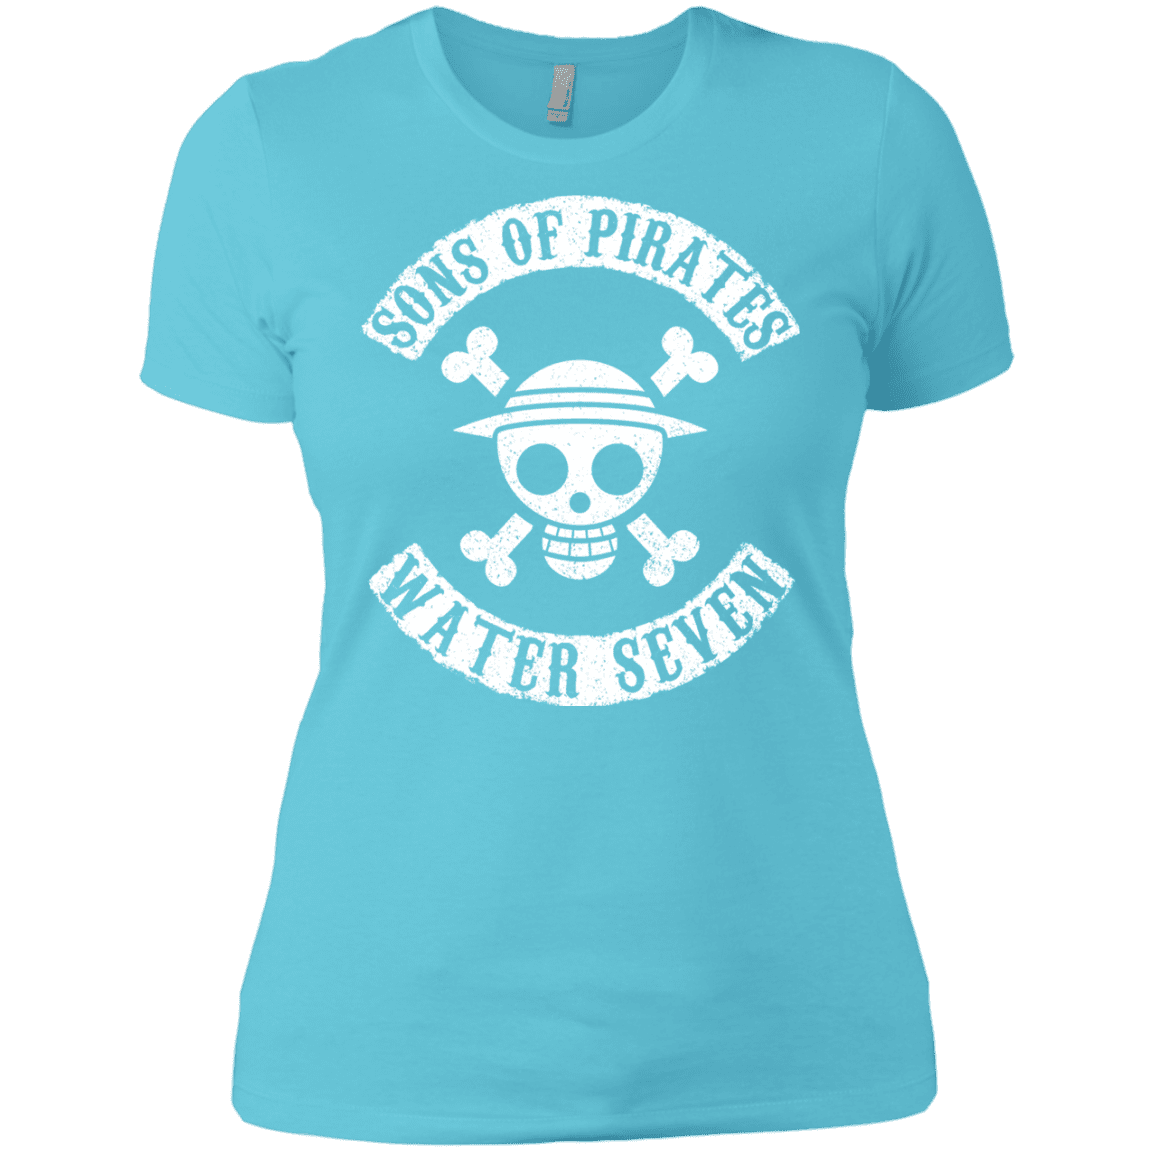 T-Shirts Cancun / X-Small Sons of Pirates Women's Premium T-Shirt